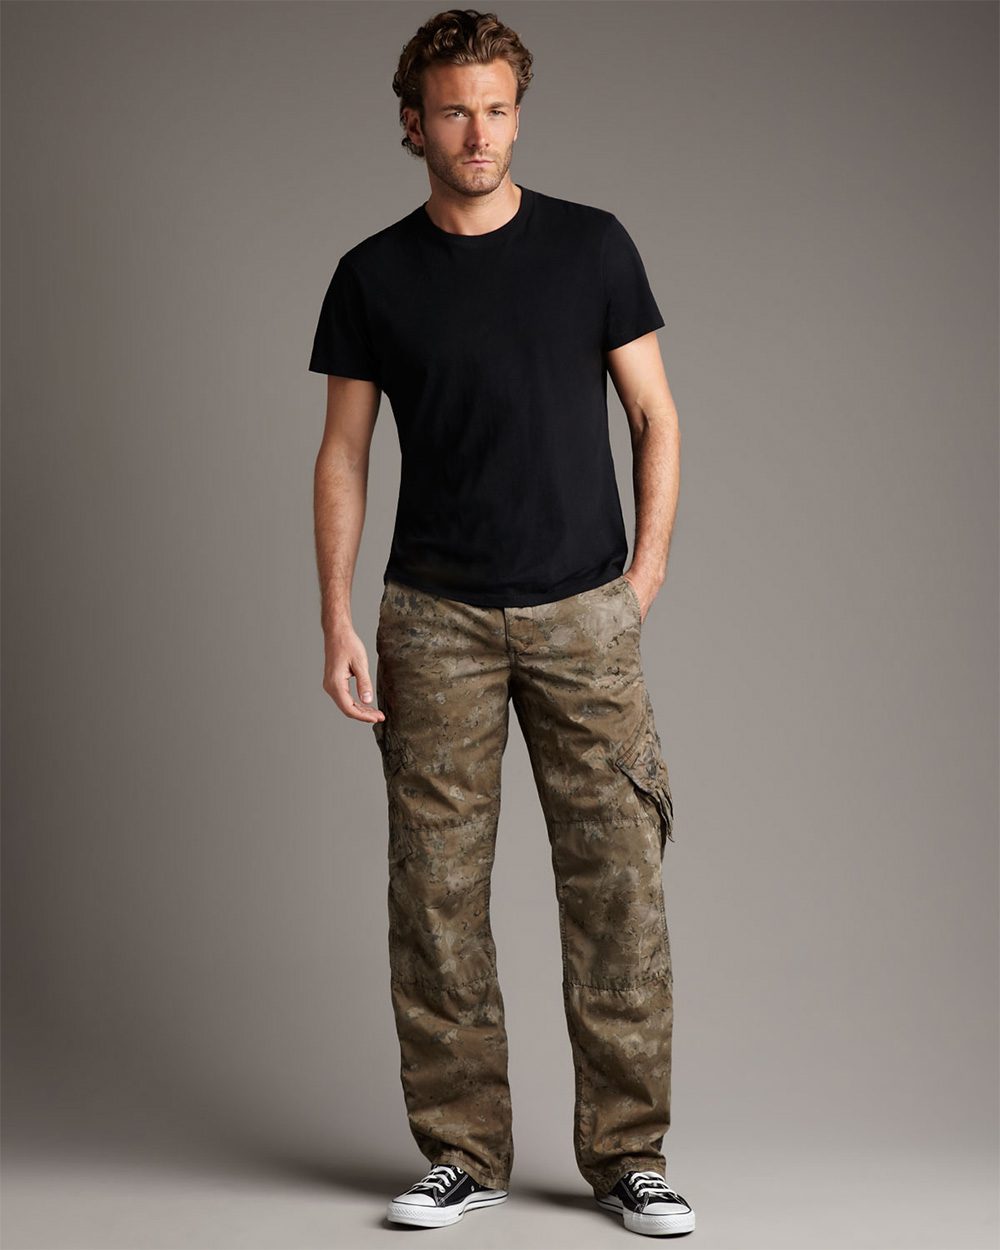 man wearing camo pants and a black shirt